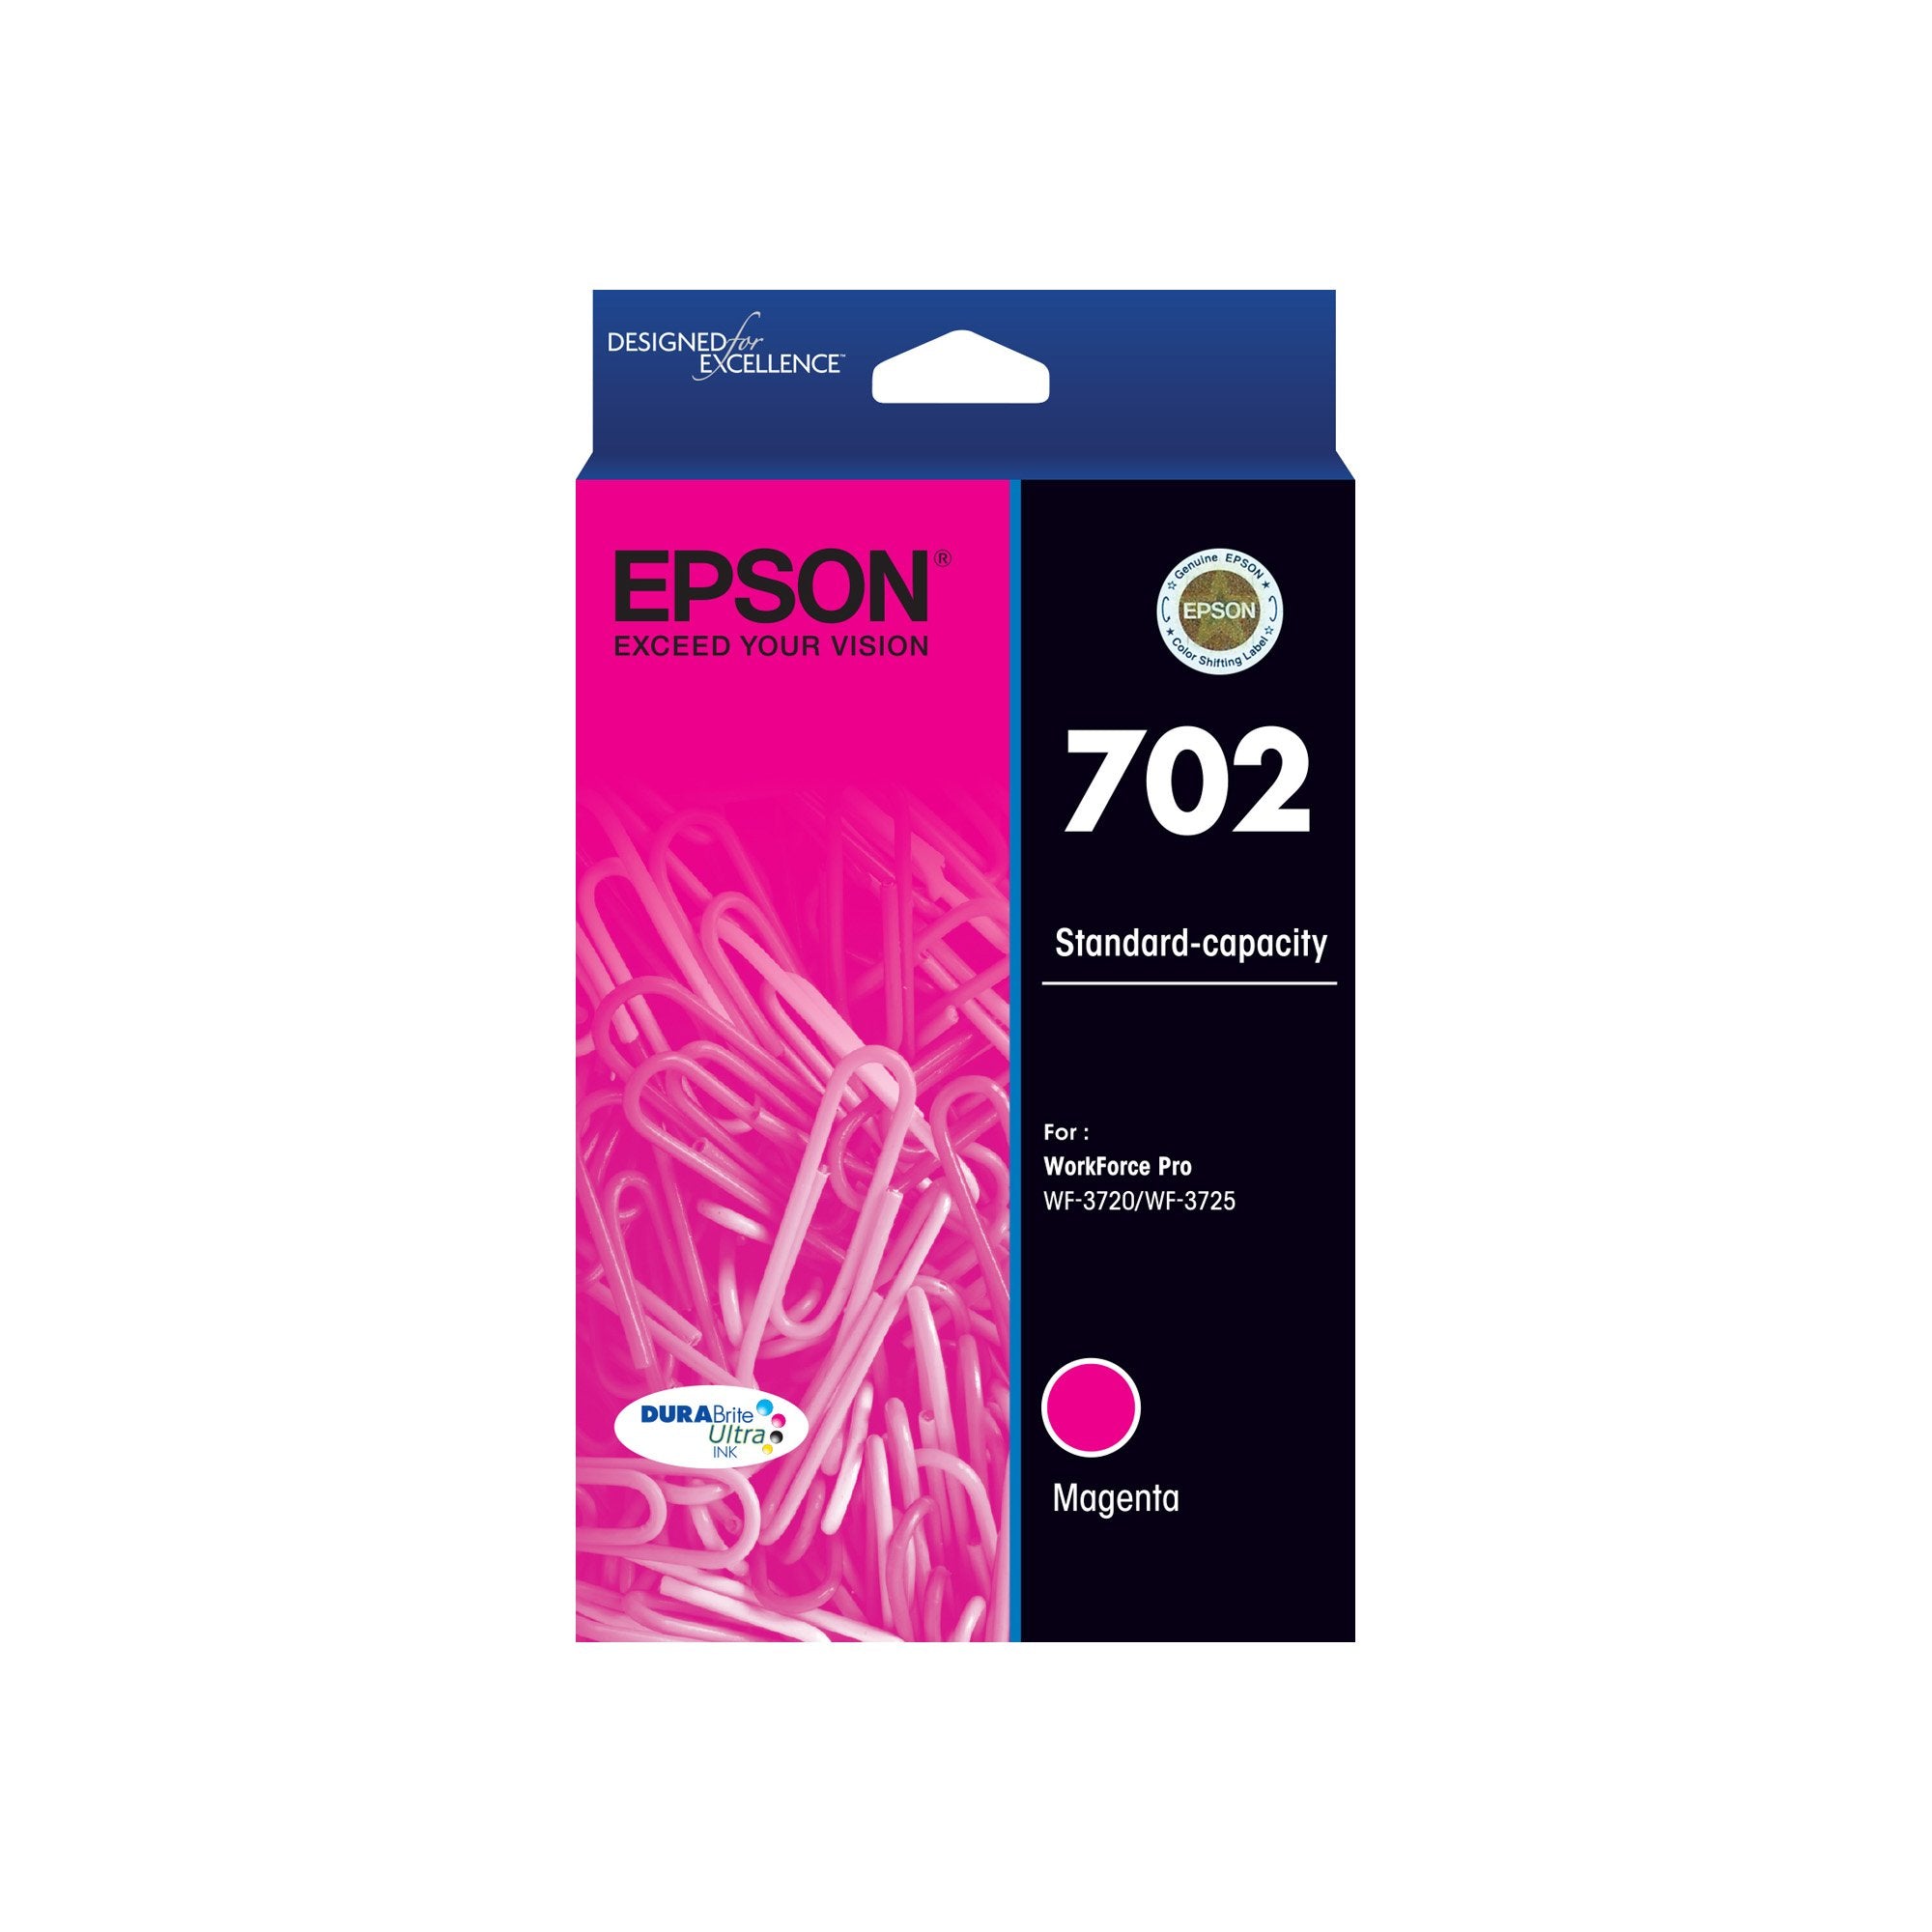 Epson C13T344392 Magenta Ink Cartridge